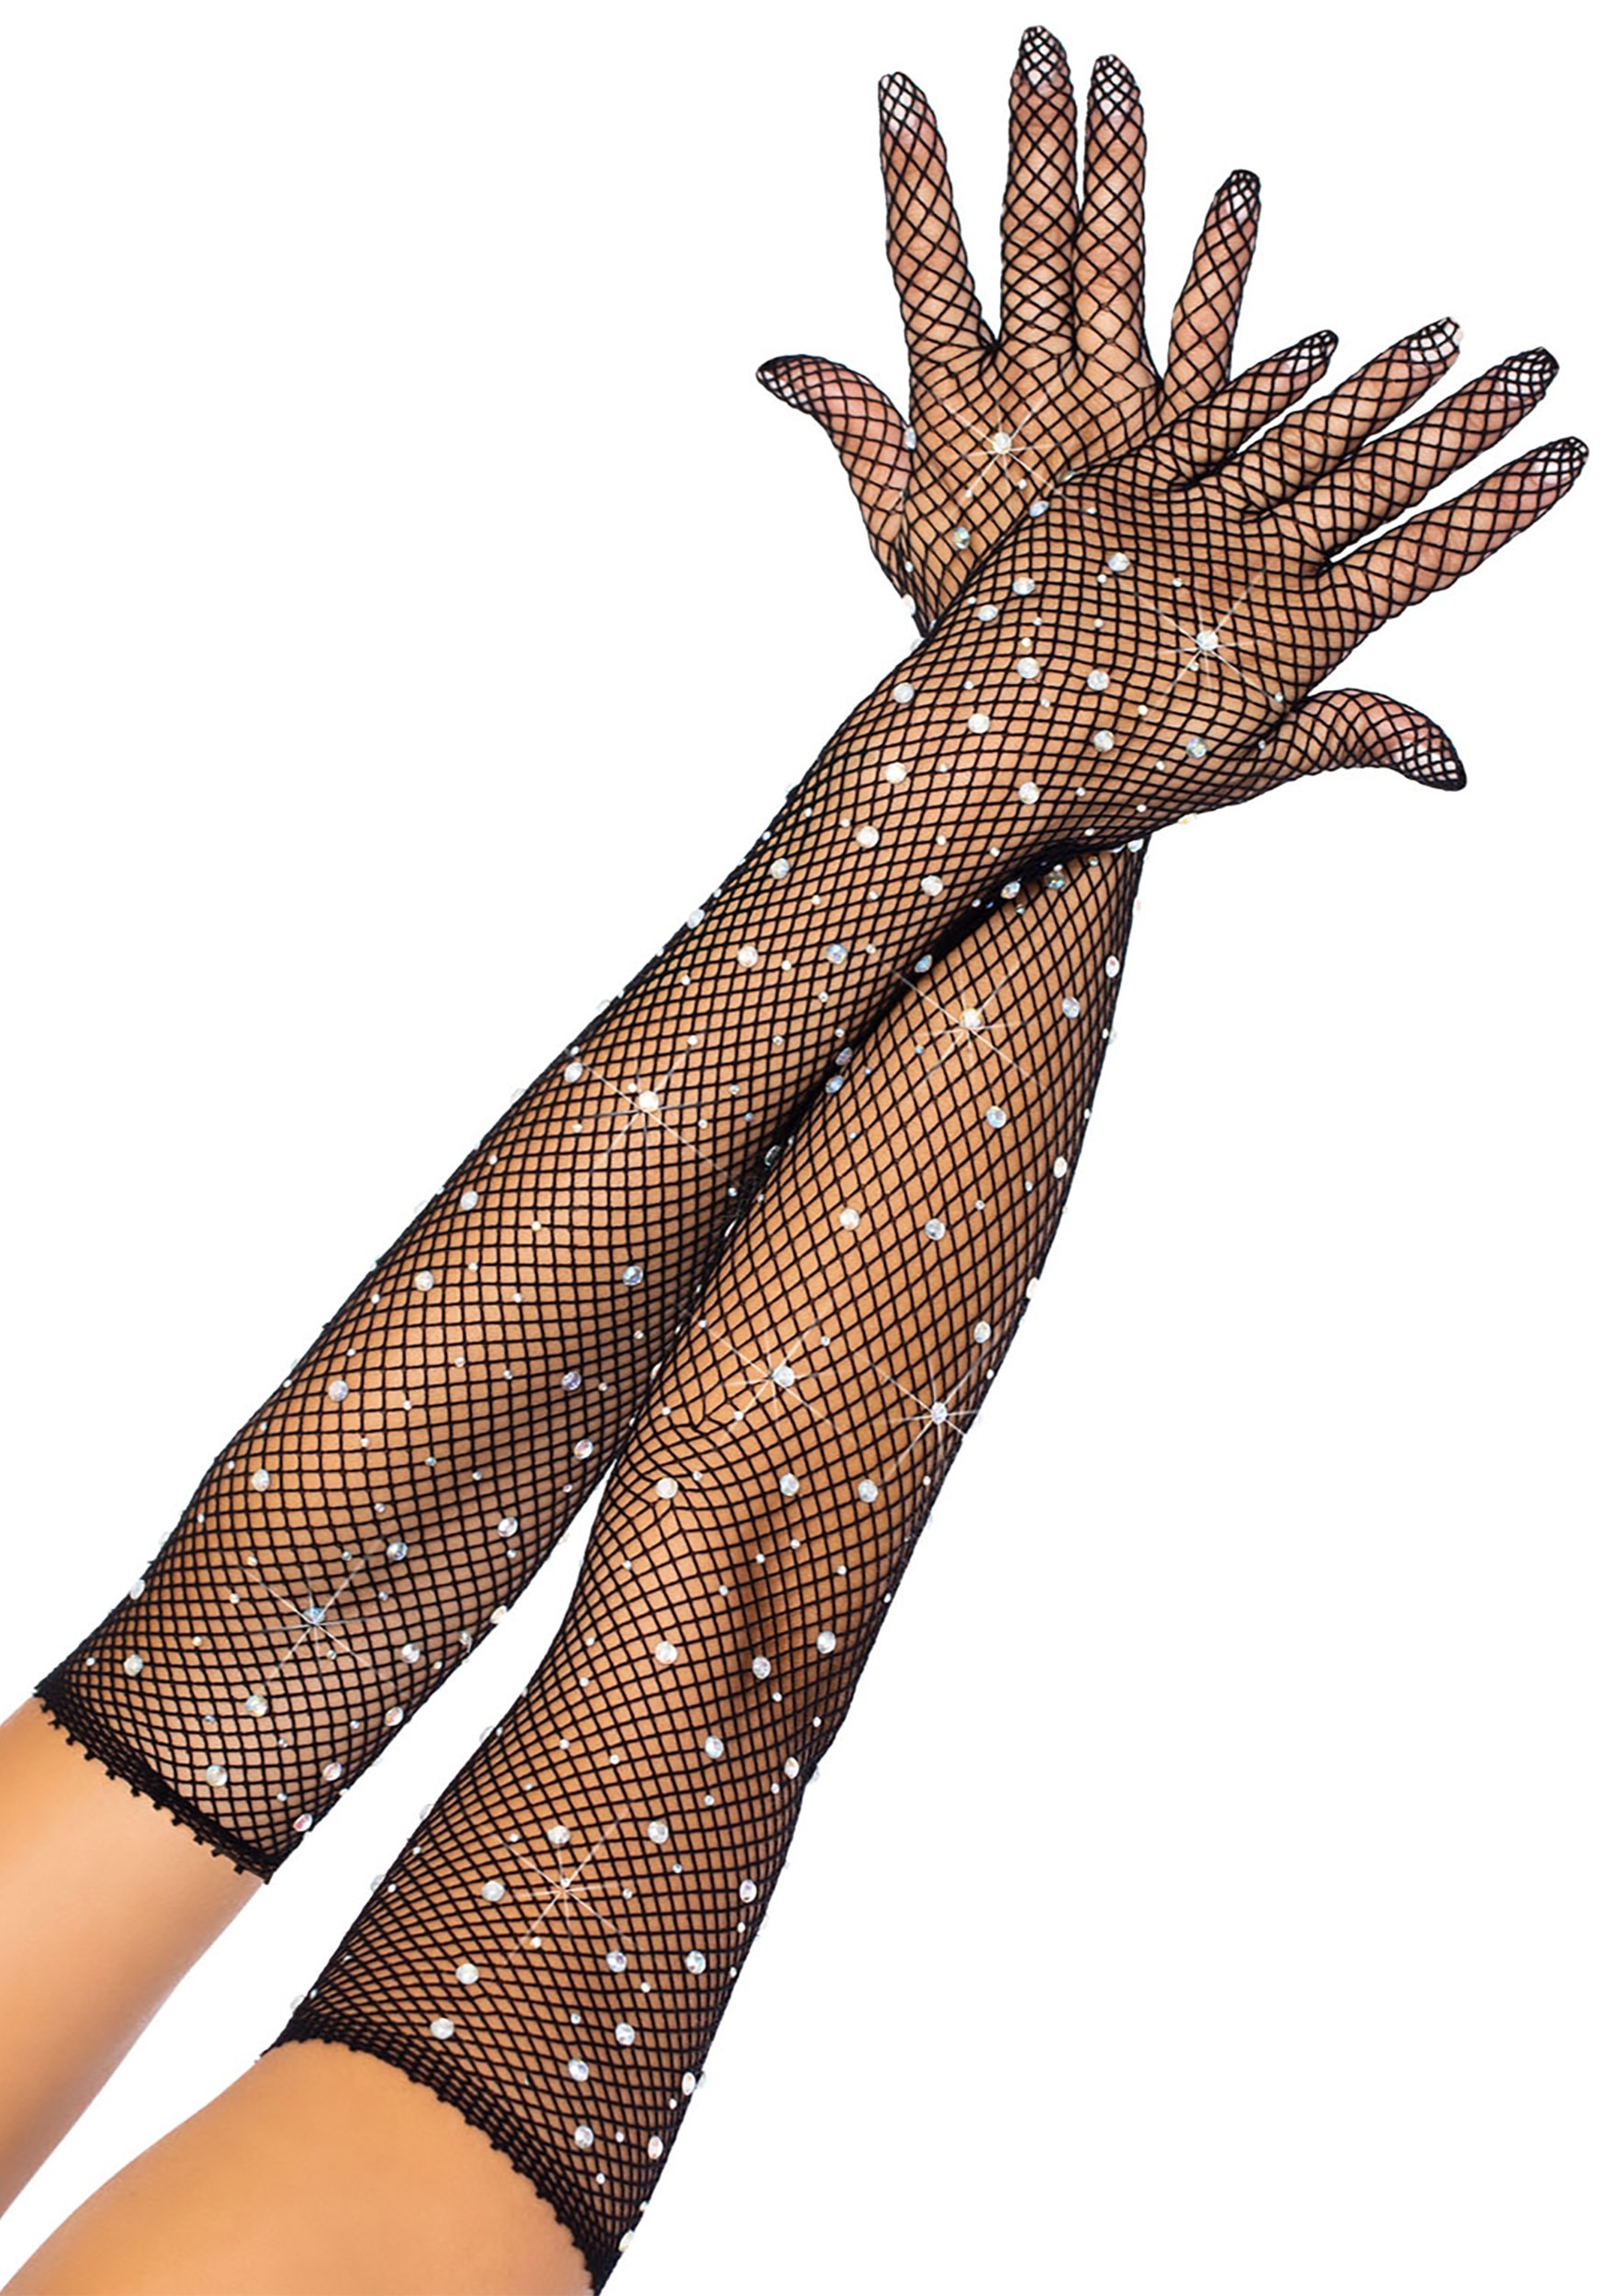 Rhinestone Fishnet Opera Length Gloves Black